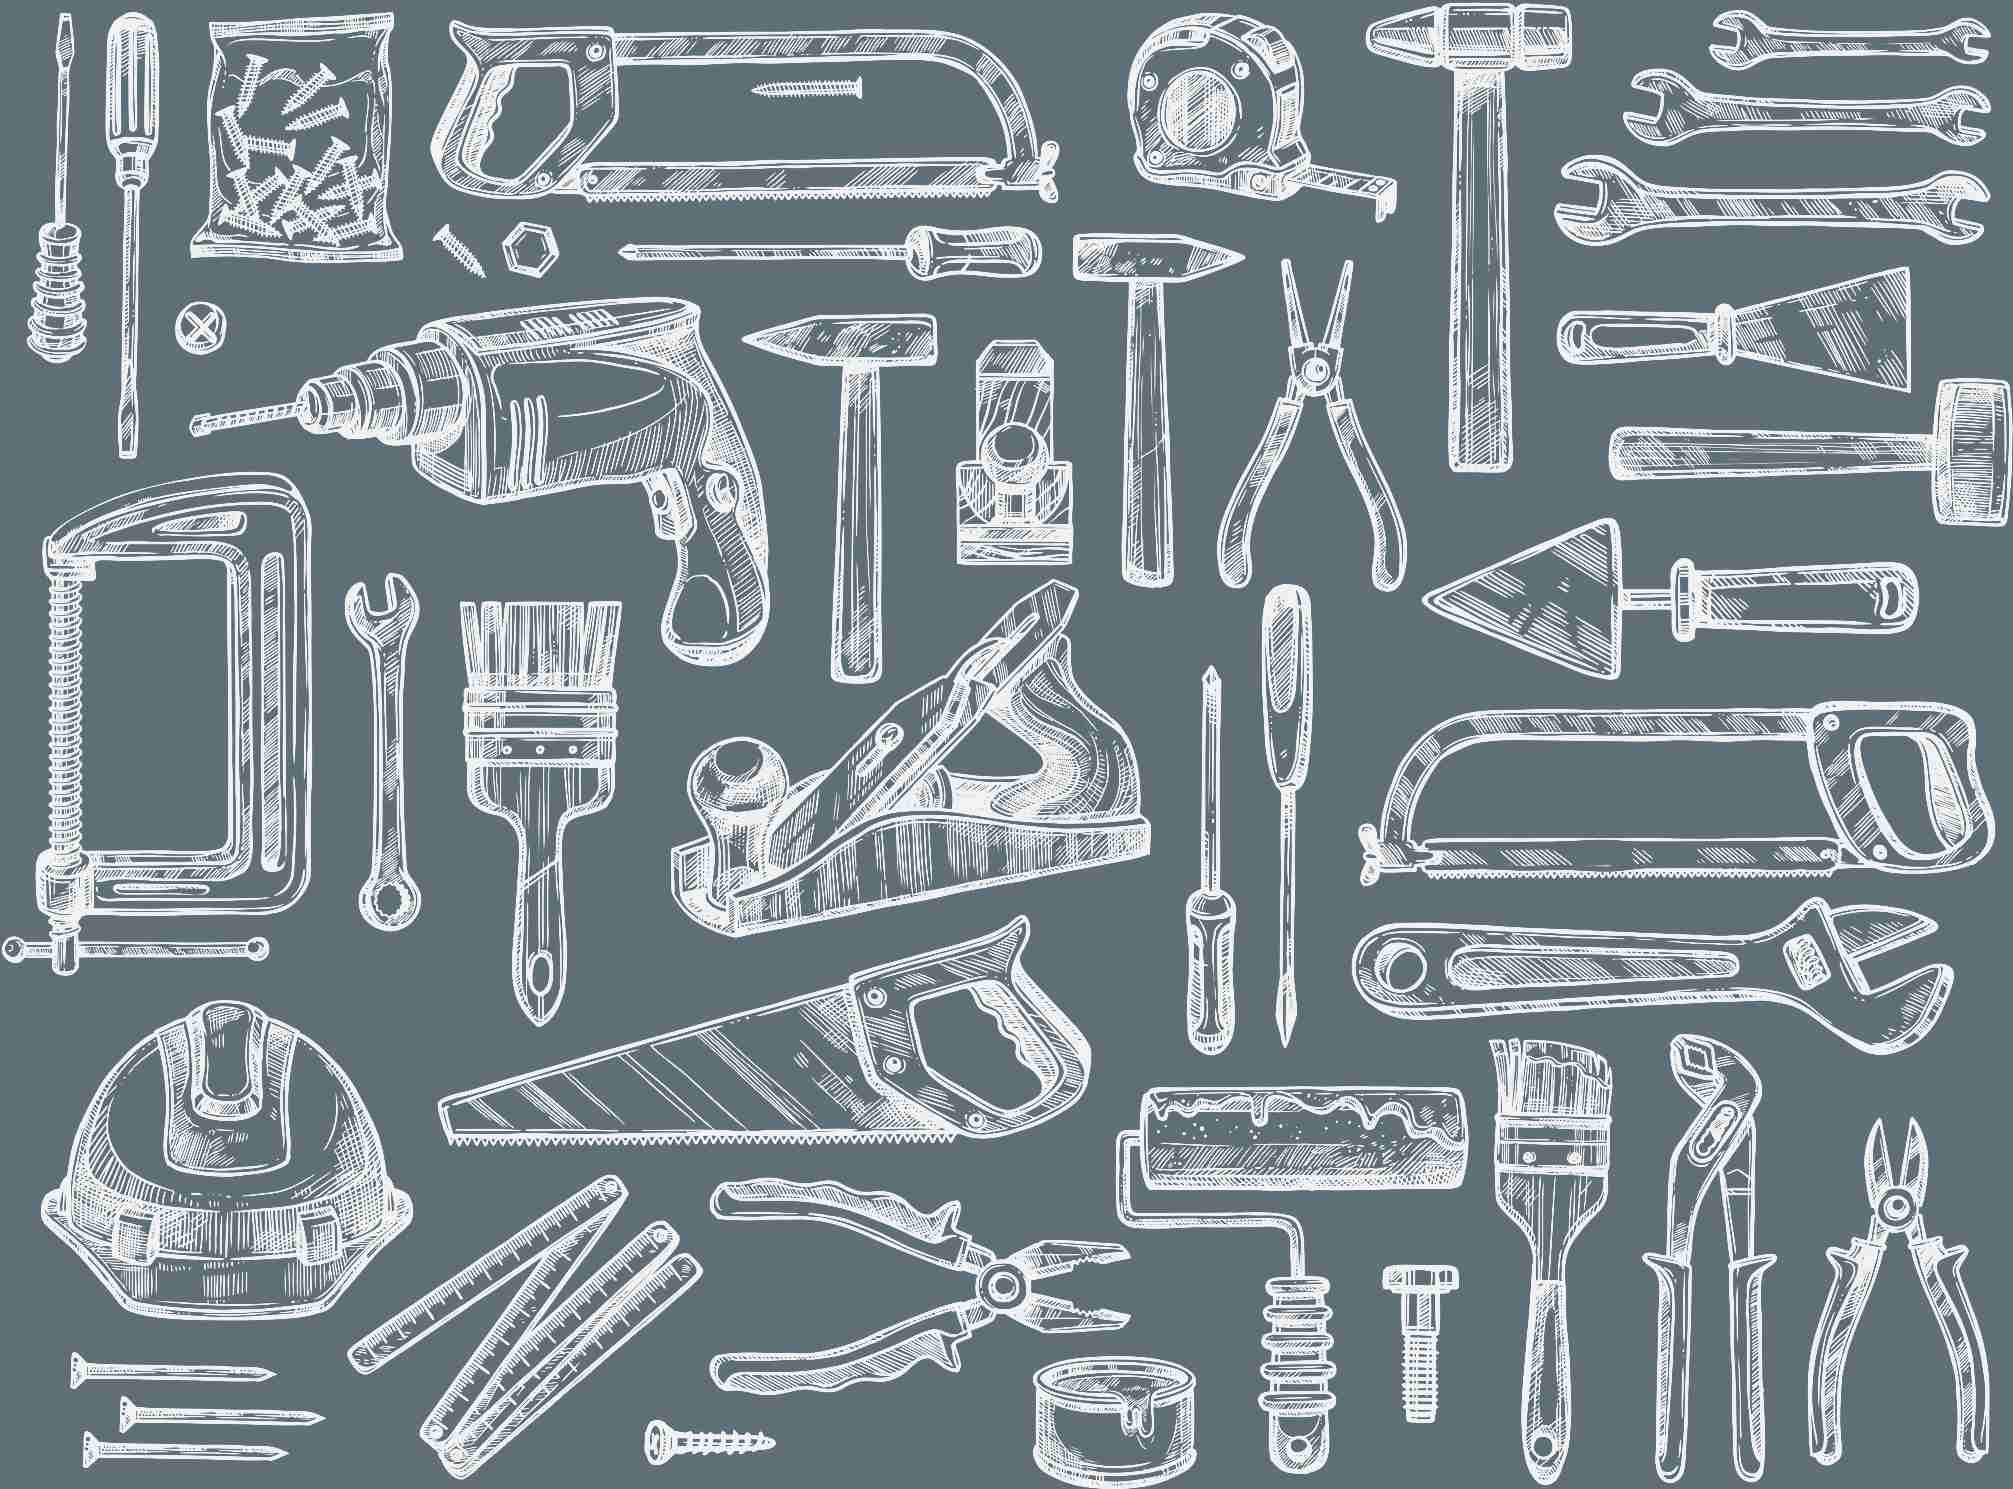 tools illustration stock photo